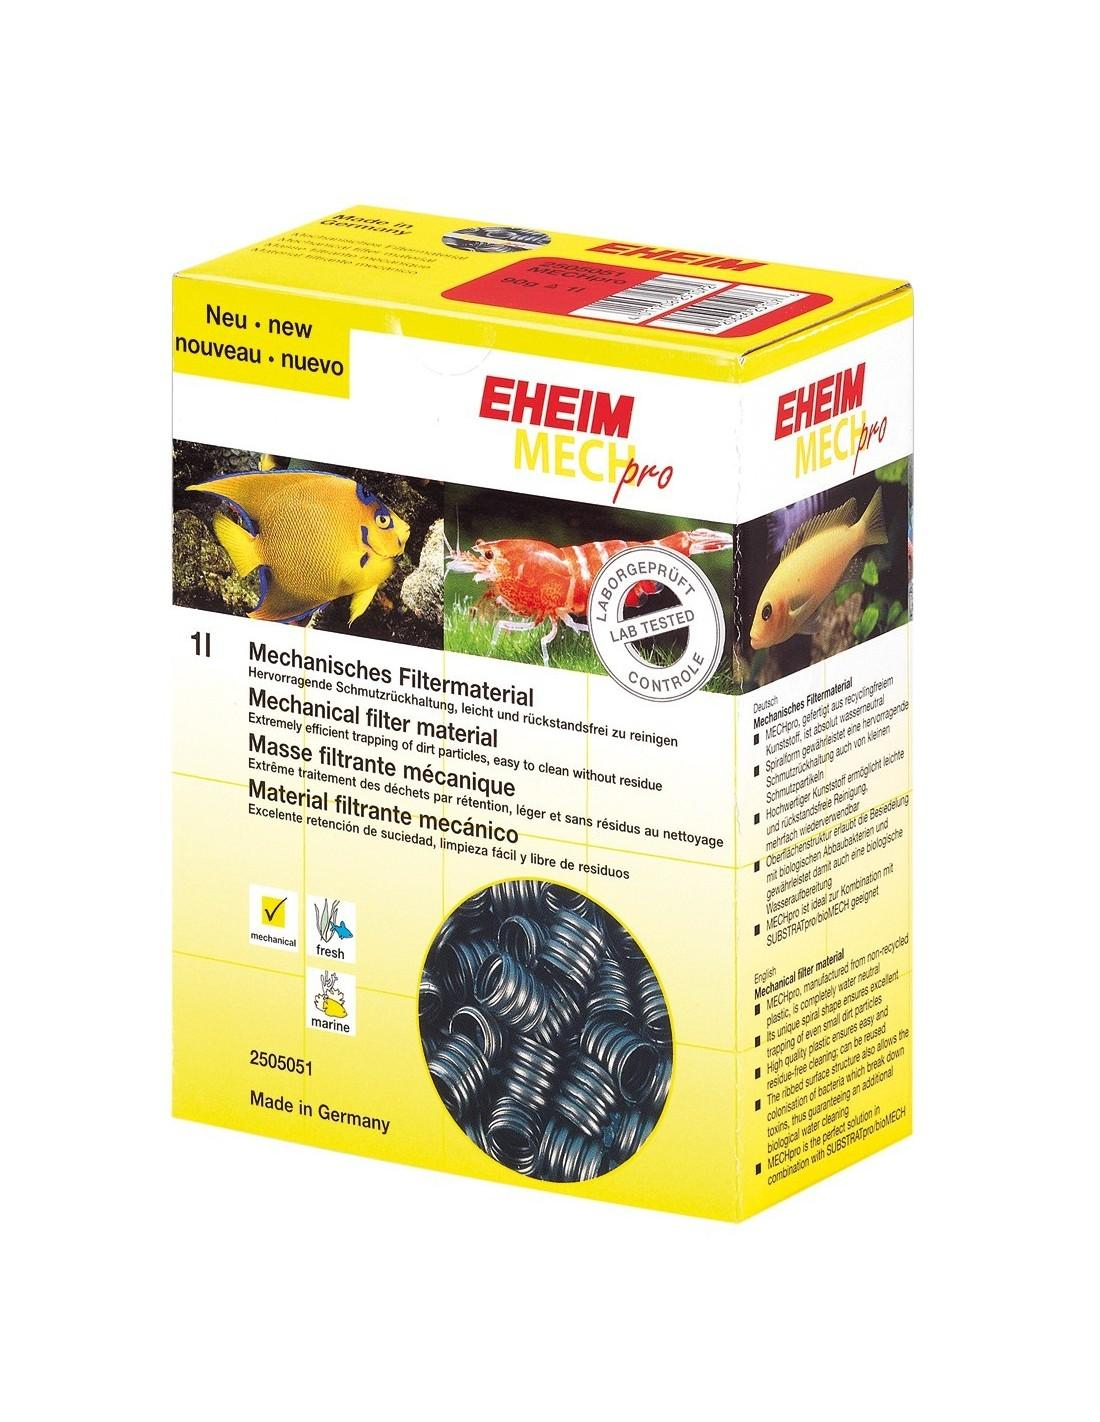 Material filtrante mecánico 90g EHEIM mech pro